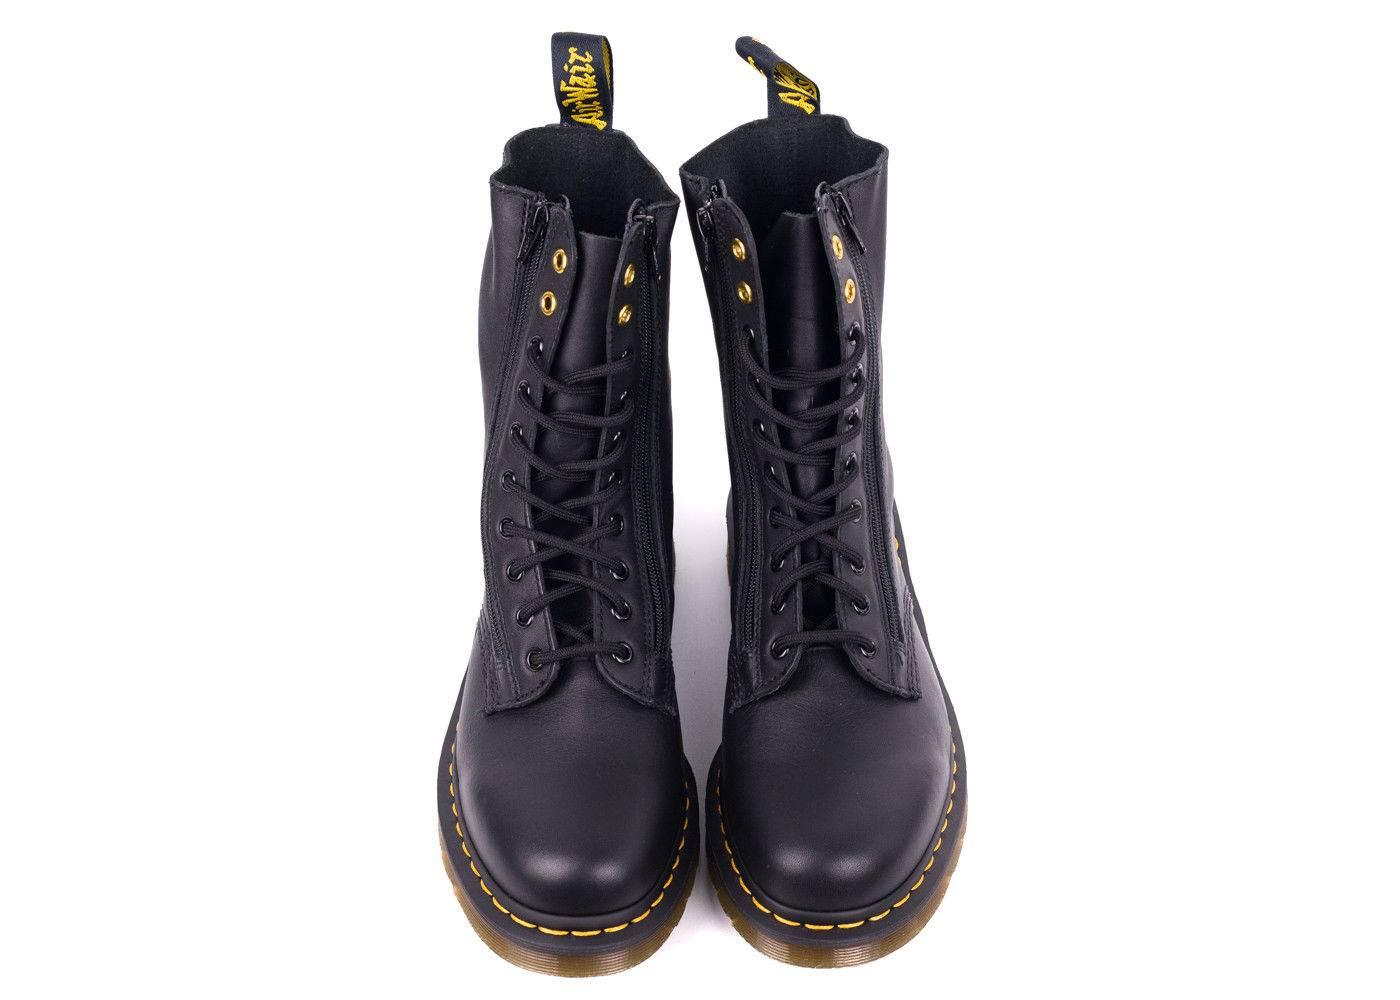 Yohji Yamamoto X Dr. Martens Mens Black Leather Combat Boots For Sale 1